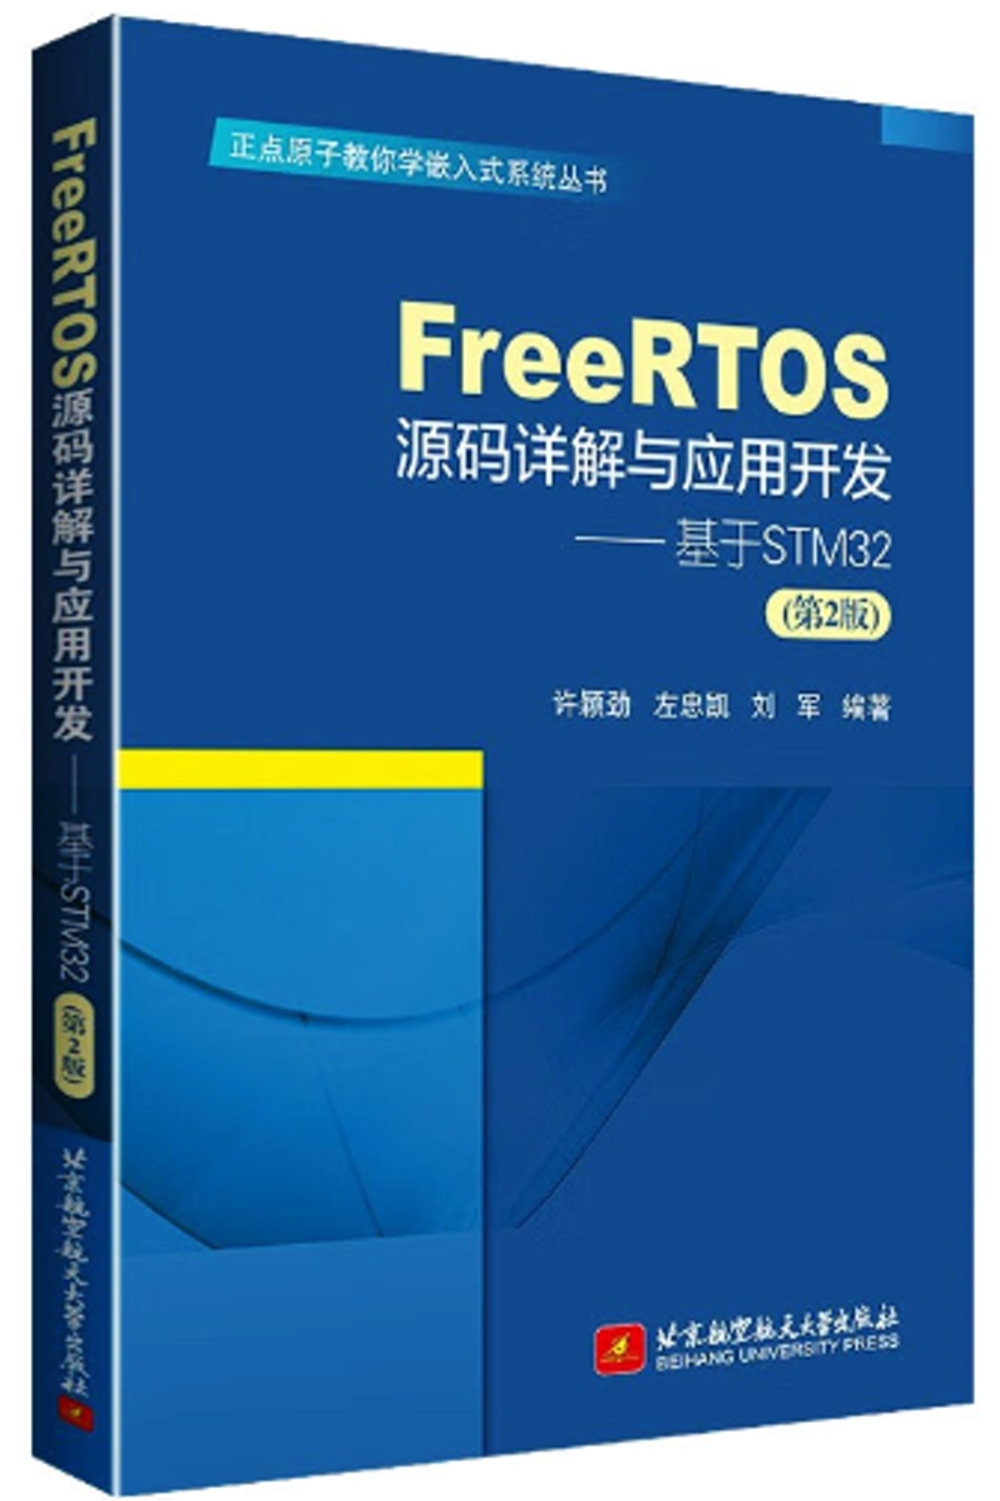 FreeRTOS源碼詳解與應用開發--基於STM32（第2版）